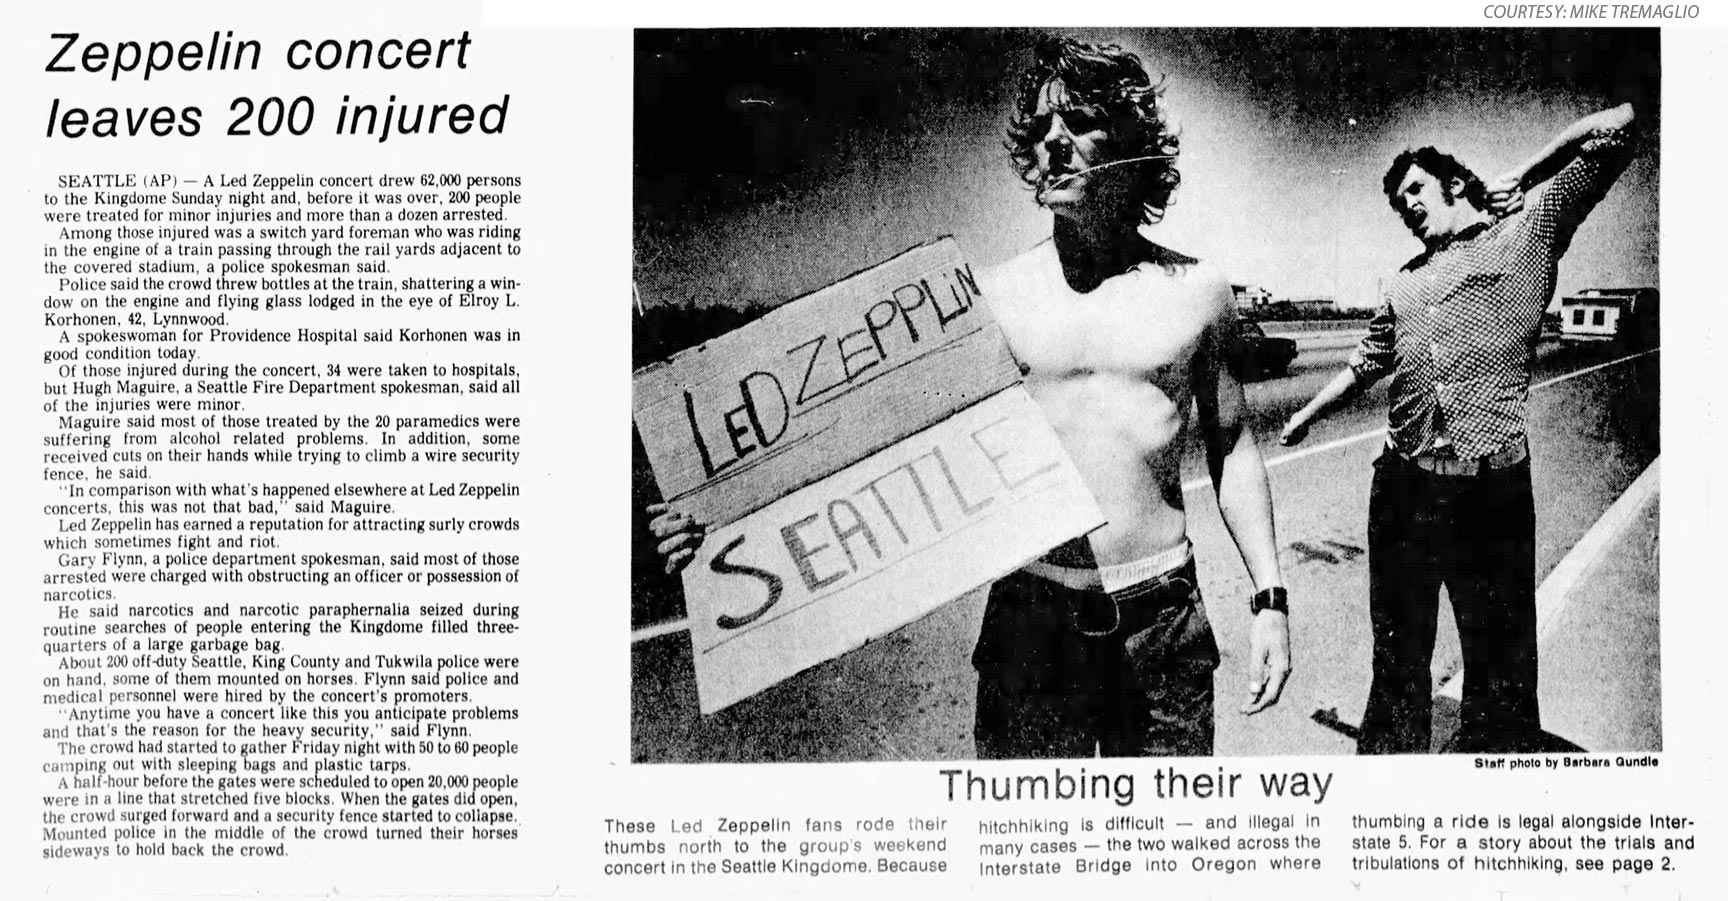 Seattle 1977 ("Thumbing Their Way")